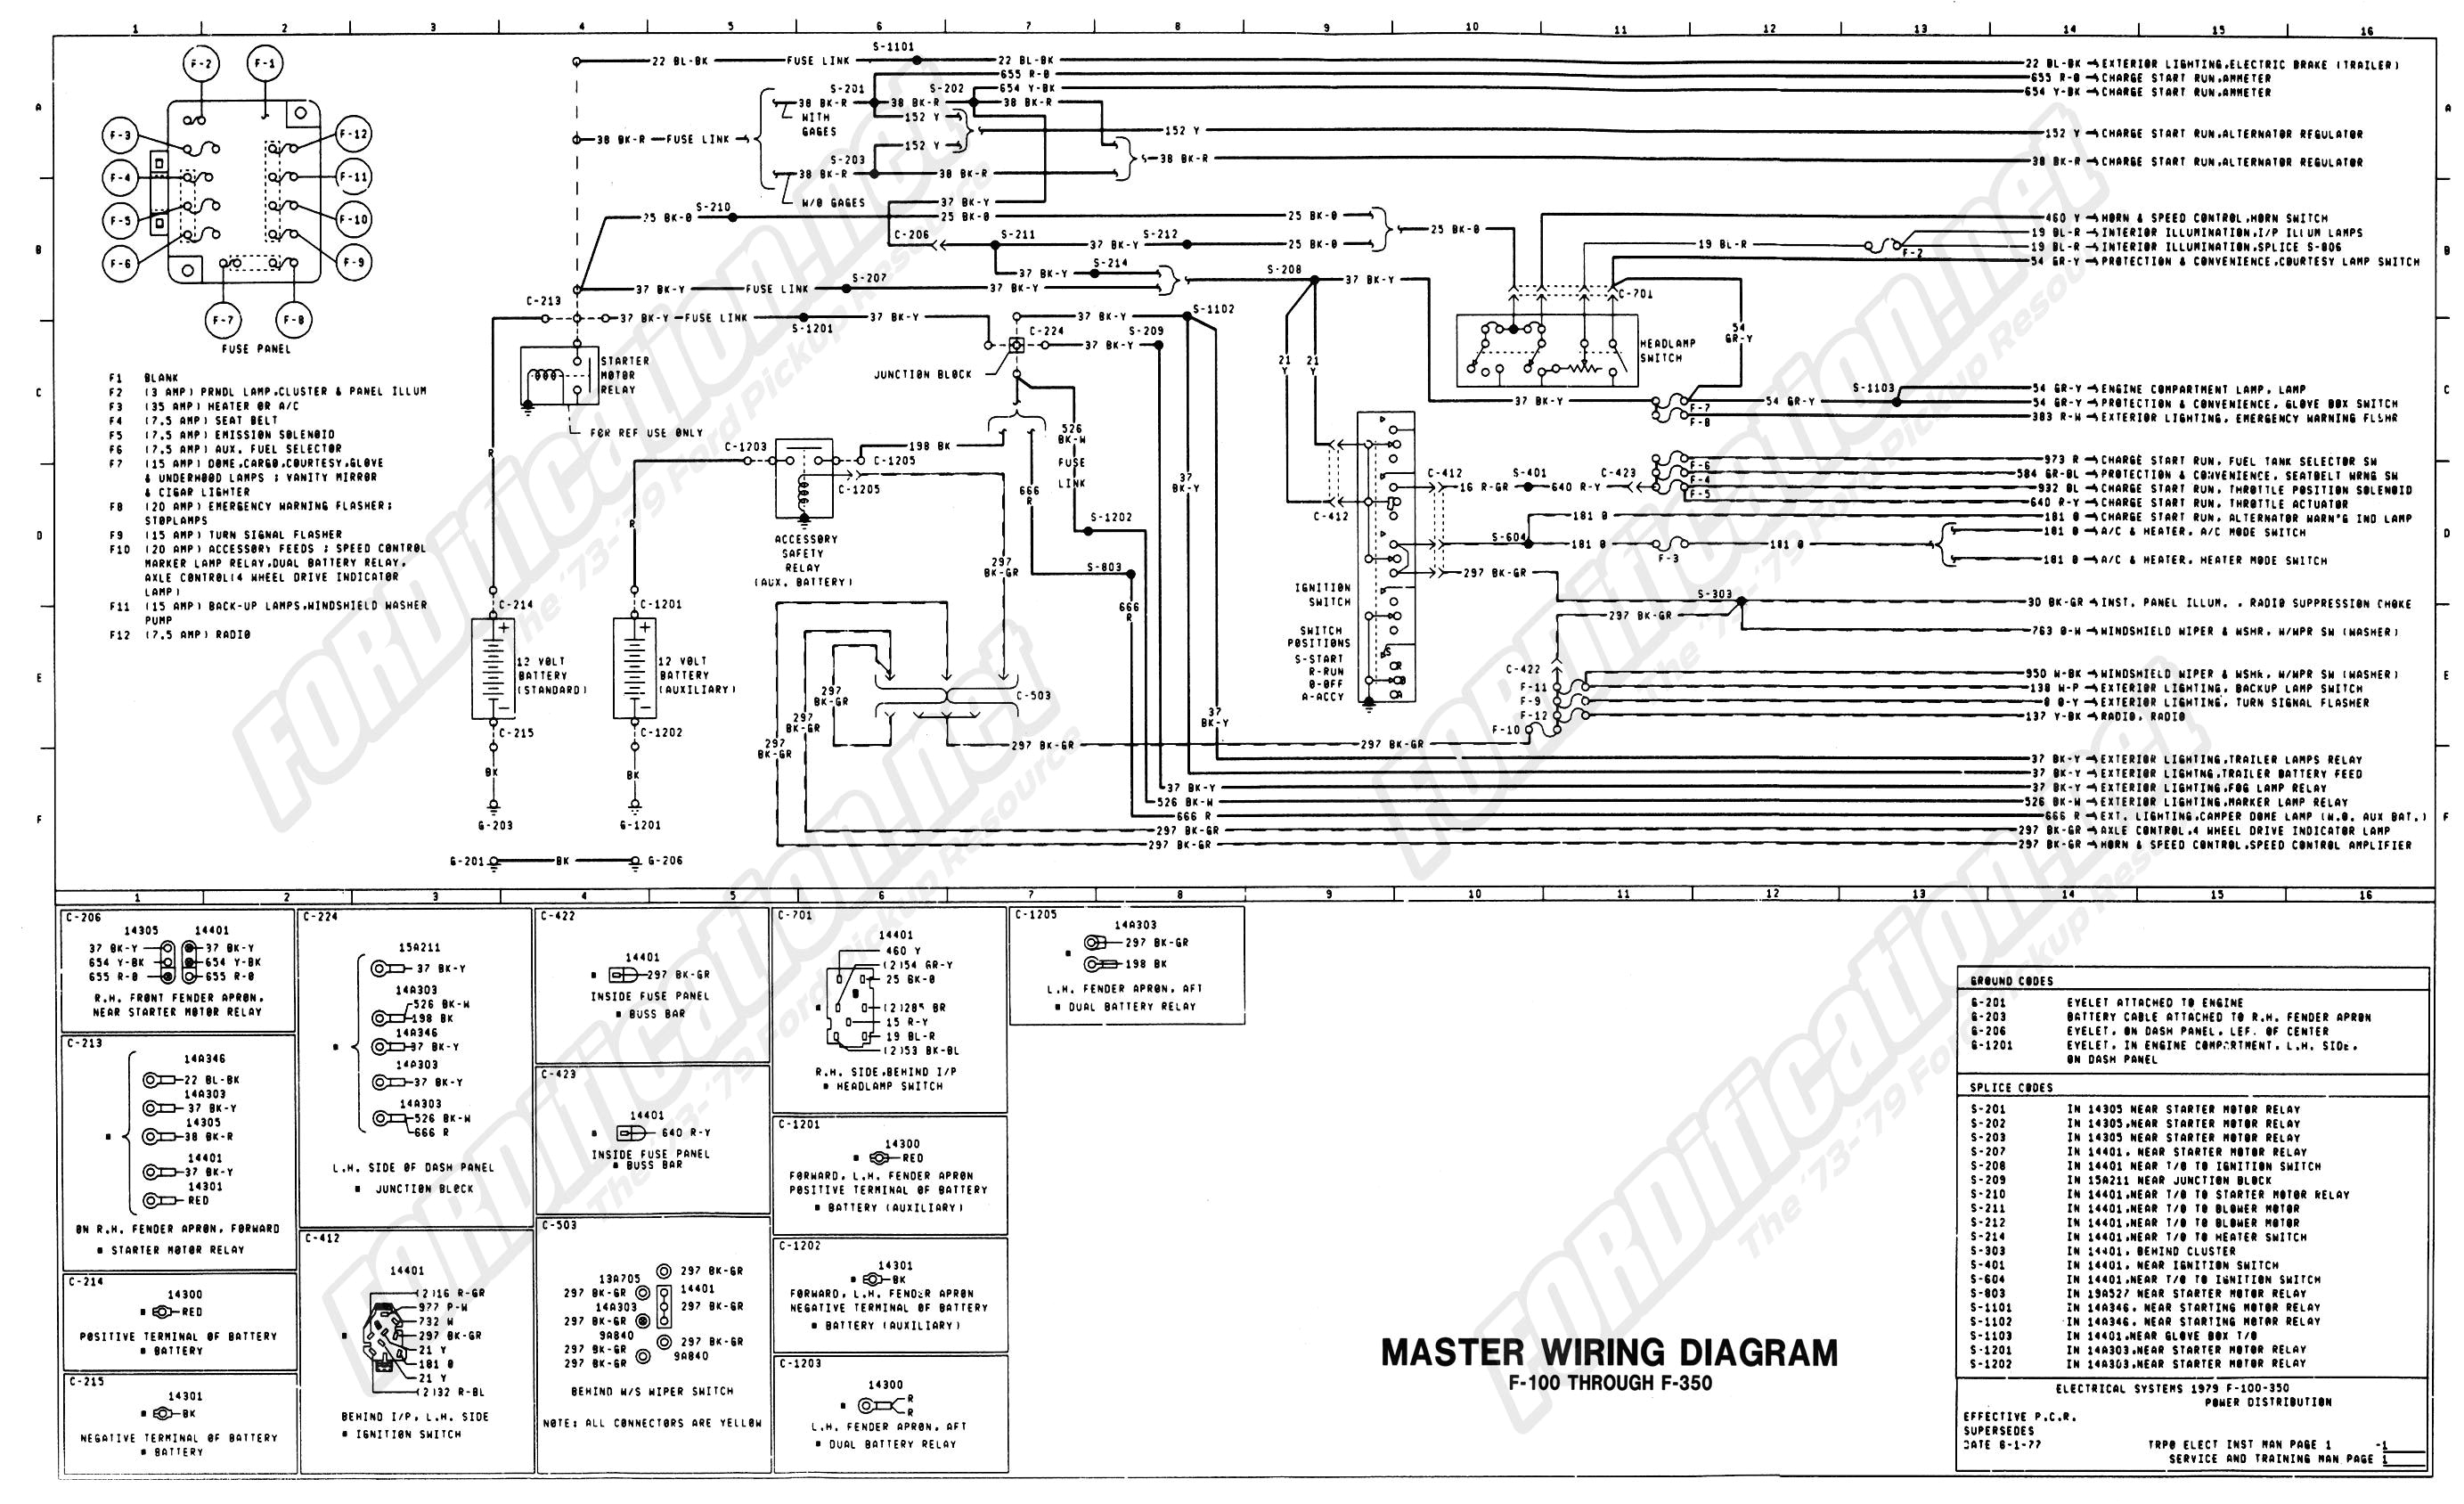 1979 dodge ignition switch wiring diagram wiring diagram database 1979 harley ignition switch wiring diagram